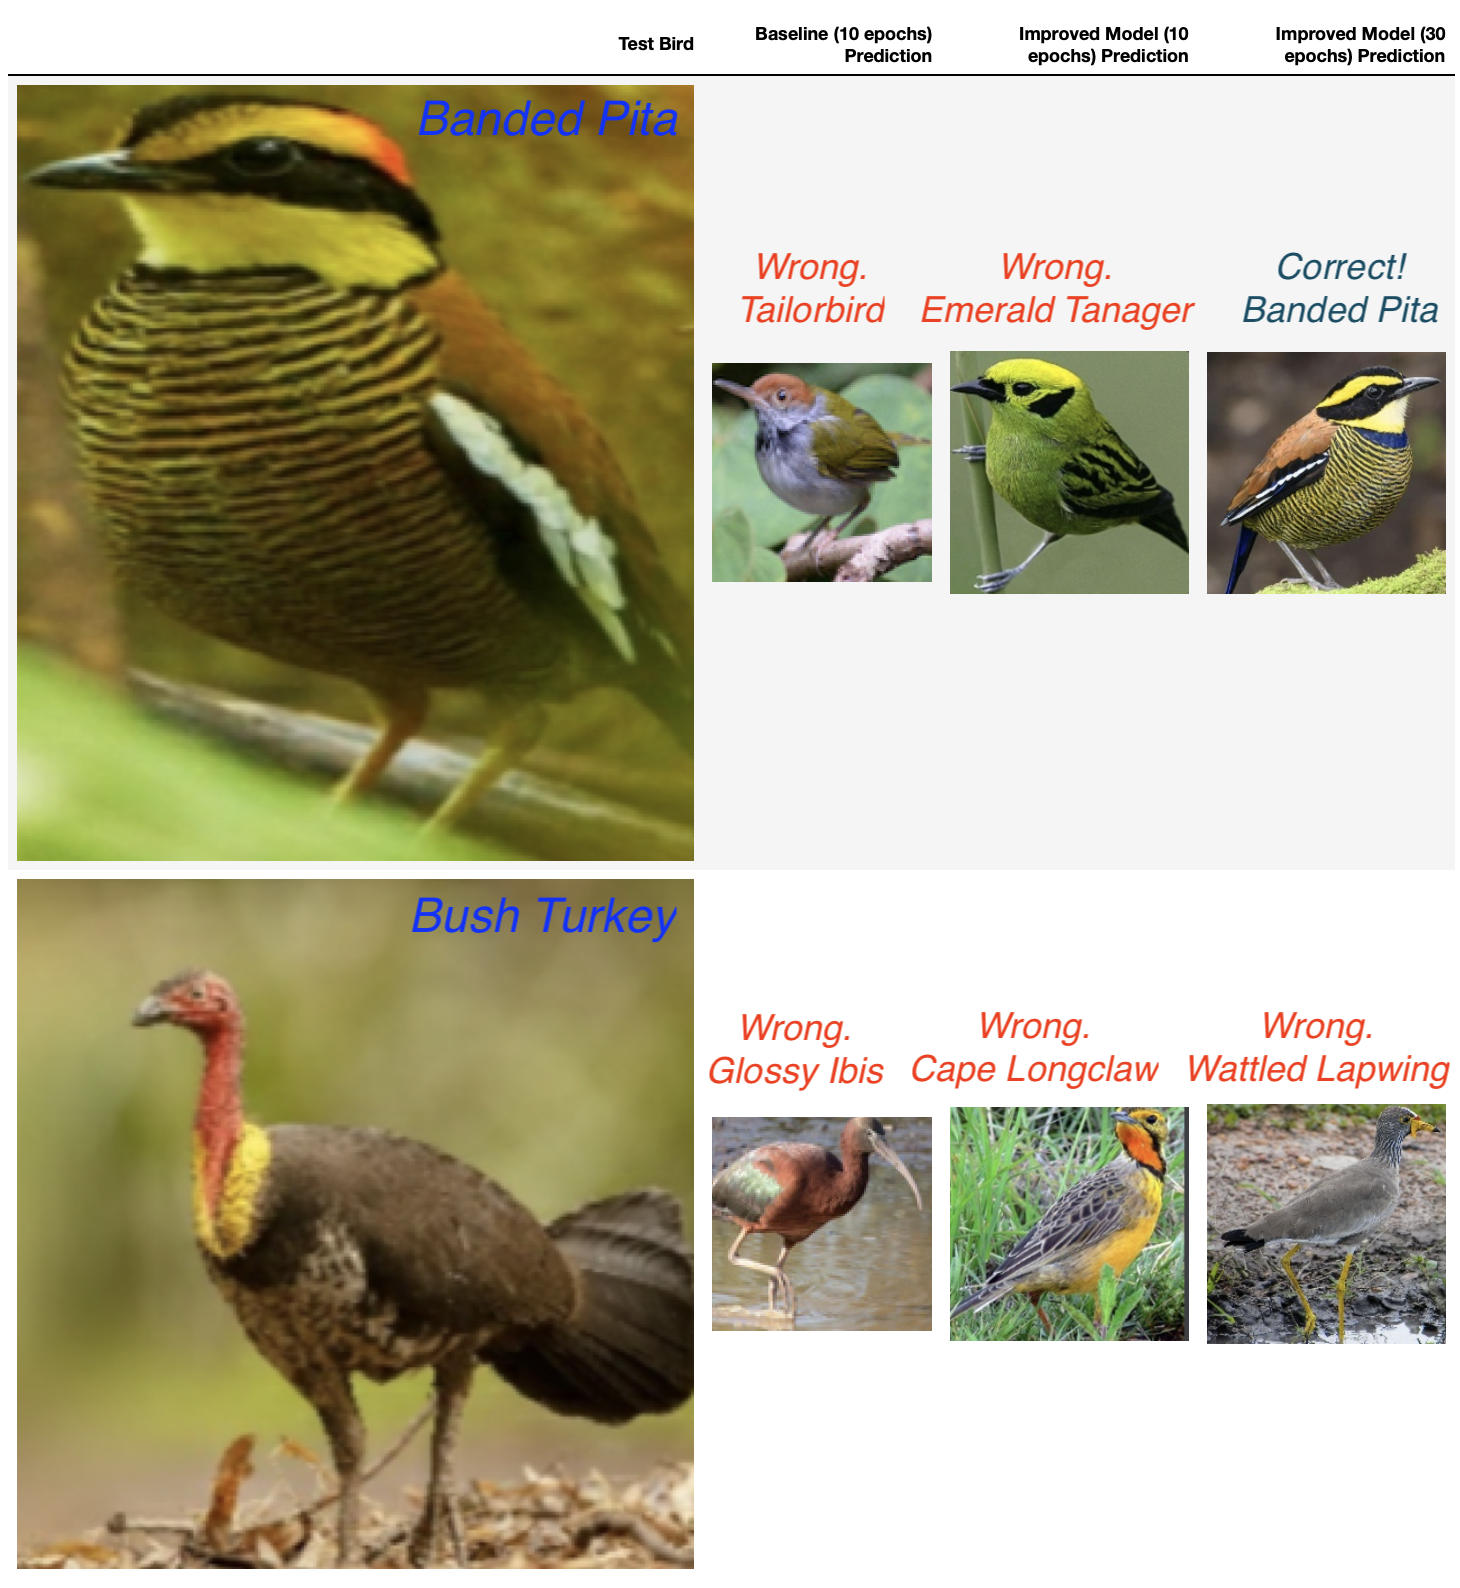 Birds Categorised: Baseline vs Improved Model